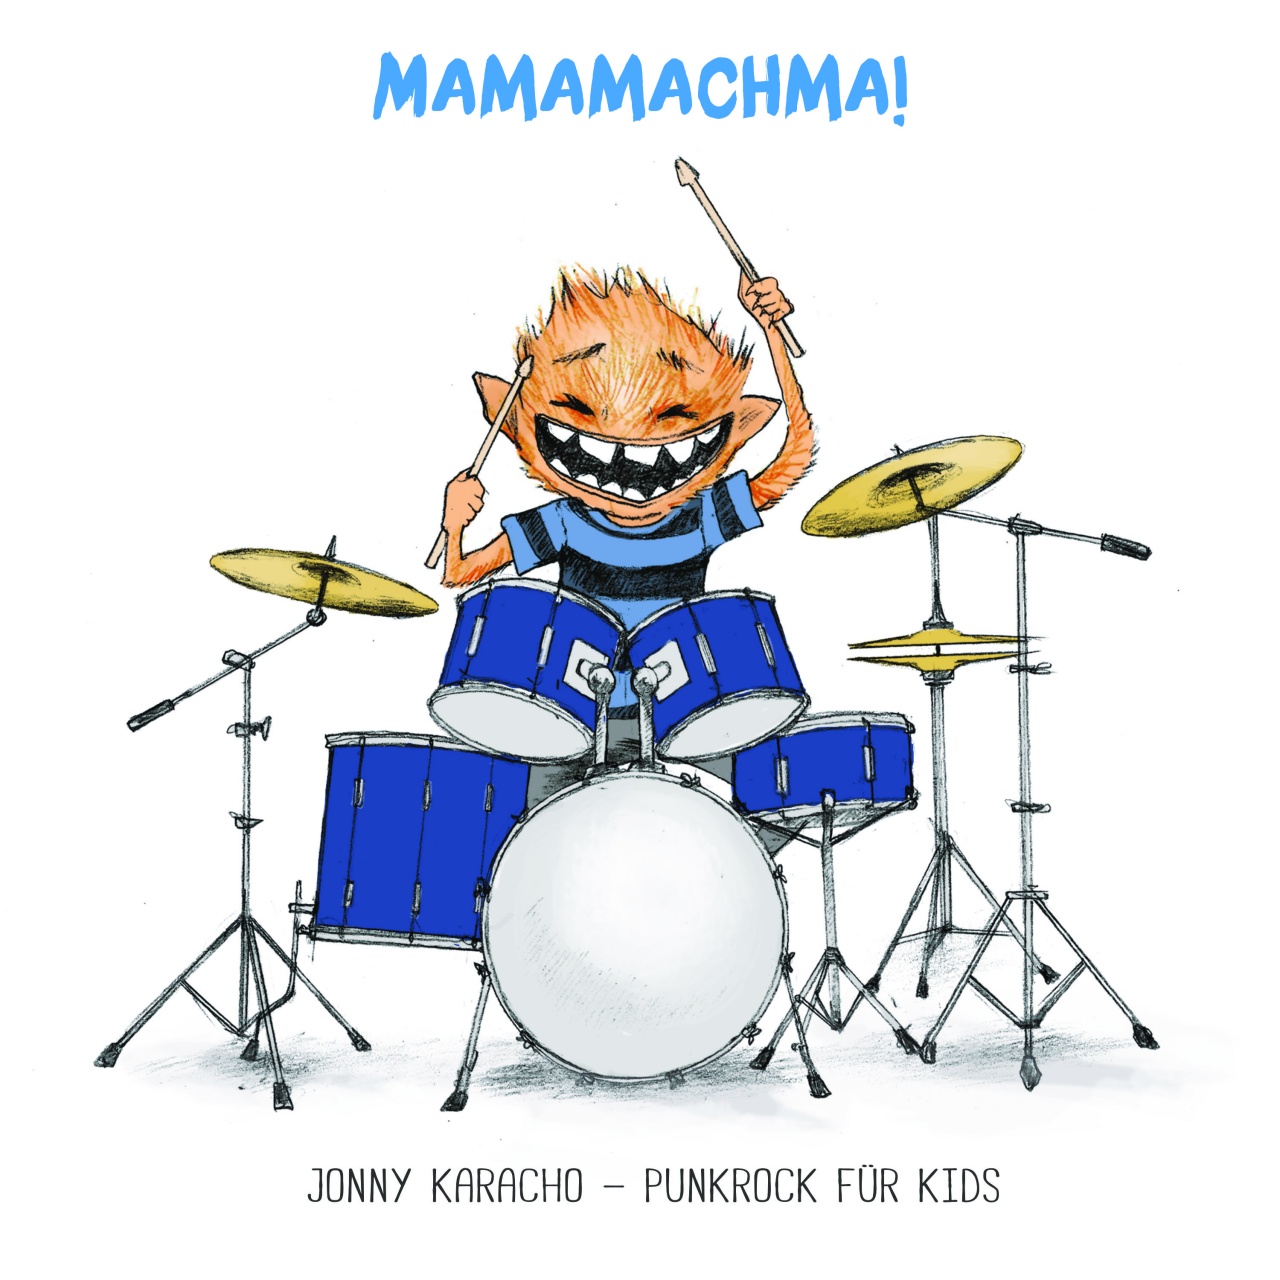 Albumcover "Mamamachma!"